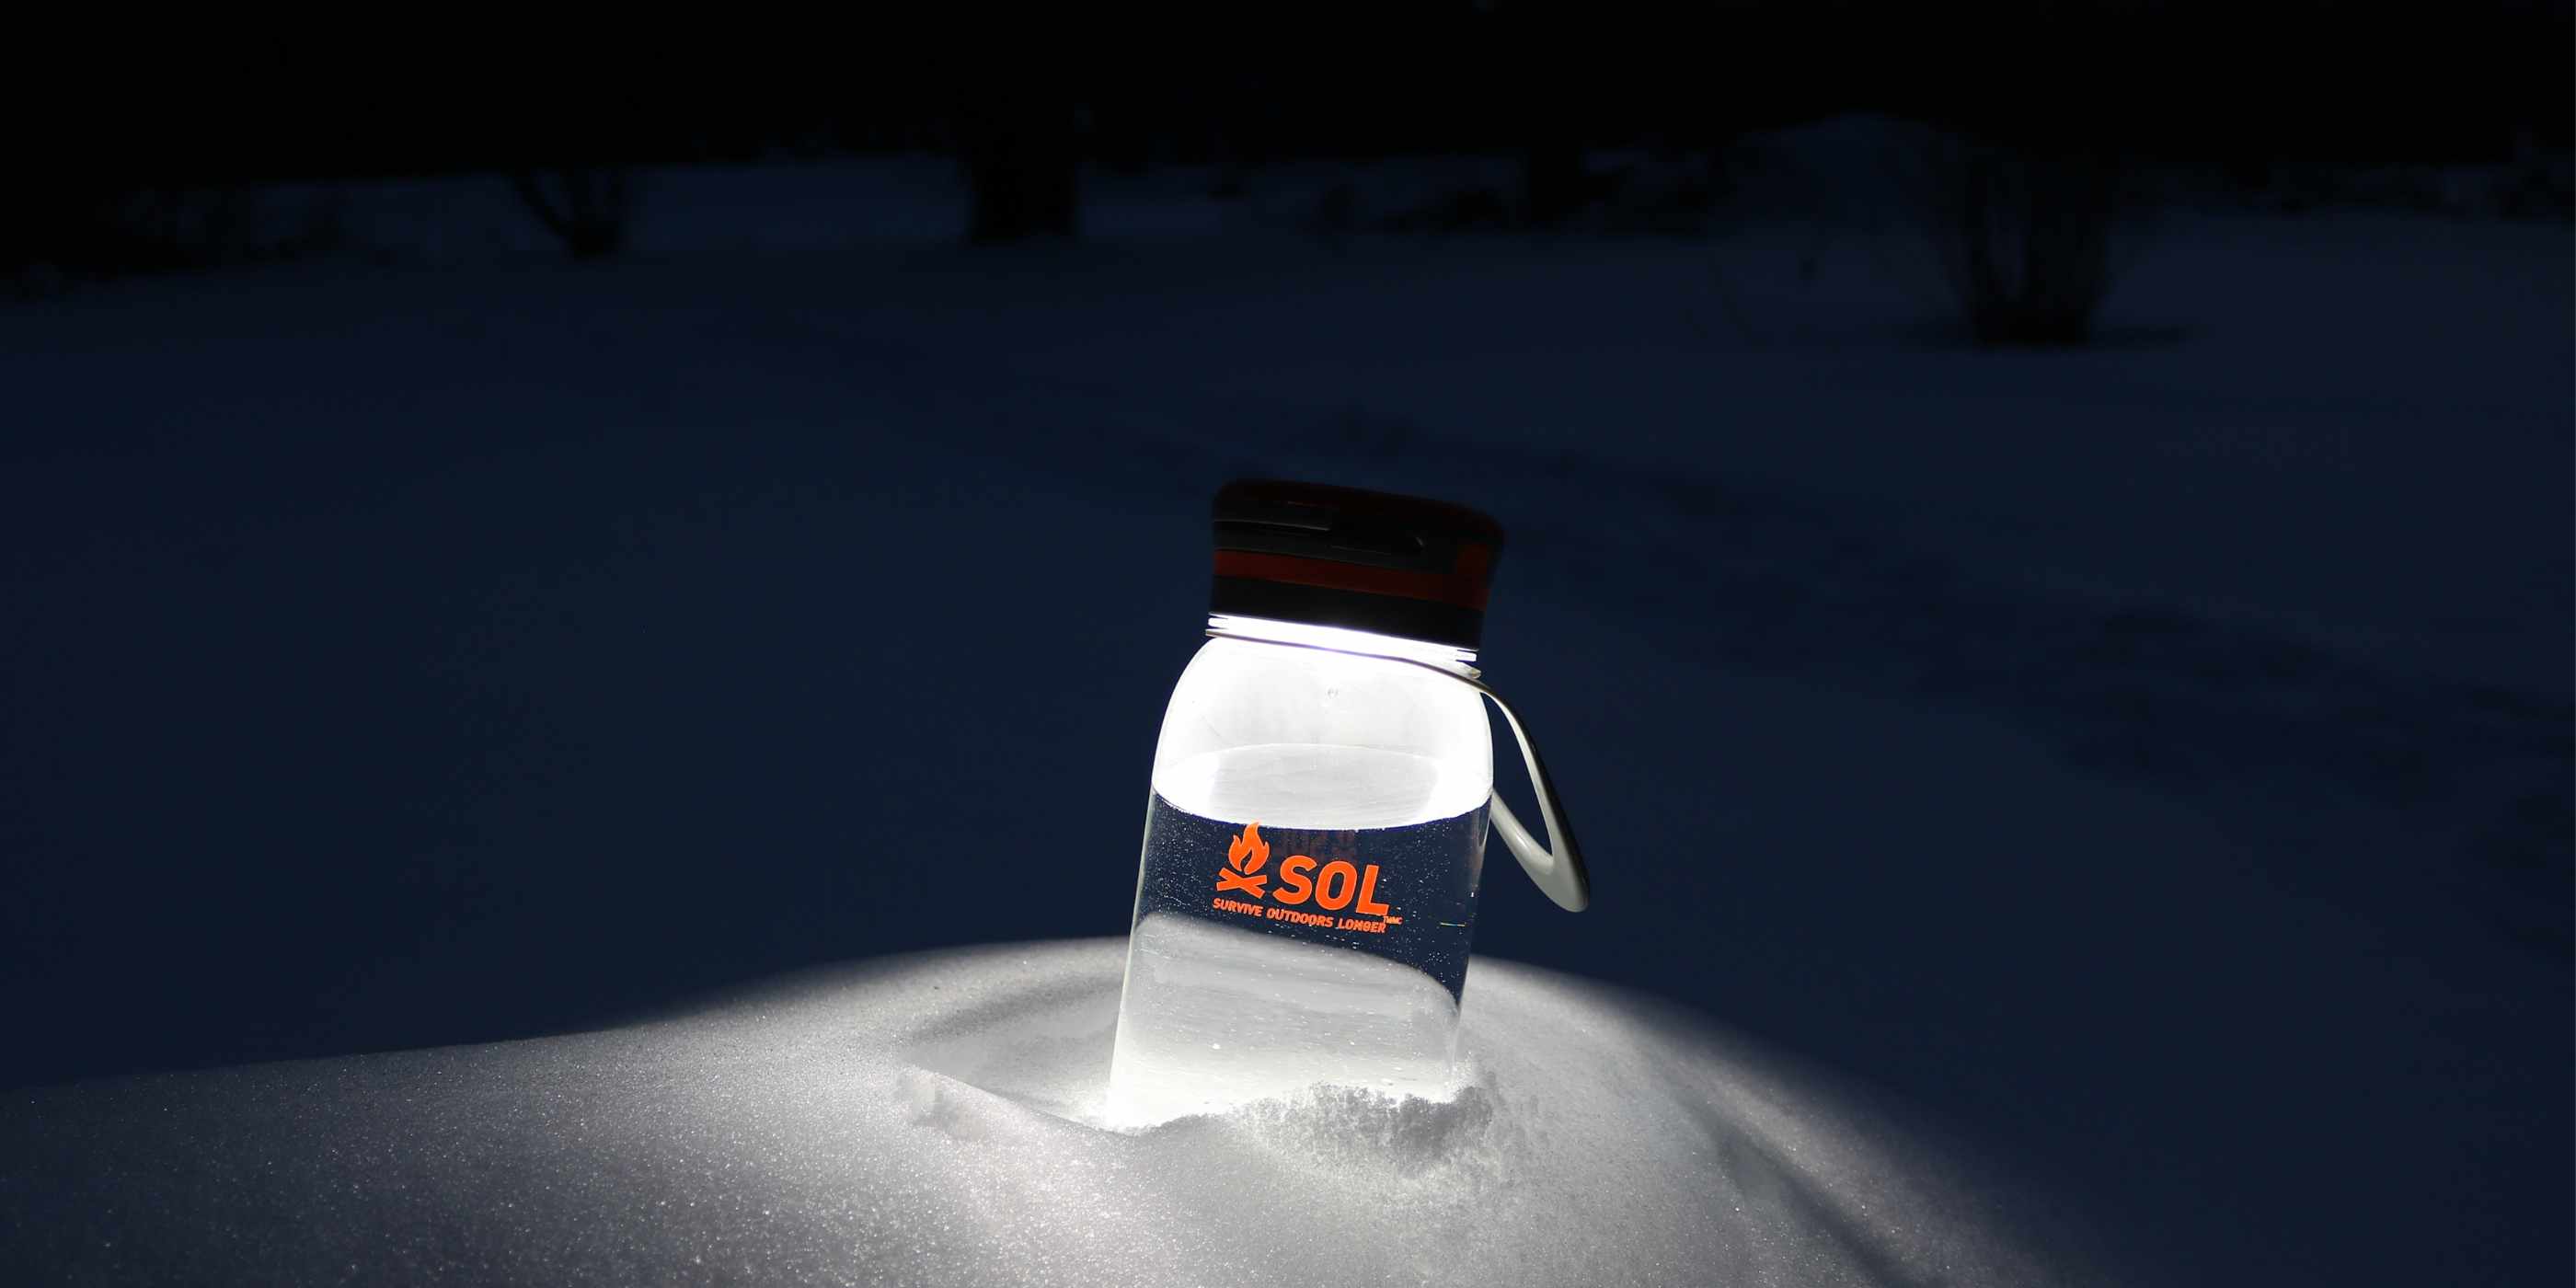 SOL Solar Water Bottle Lantern Lit Sitting in Snow in Darkness